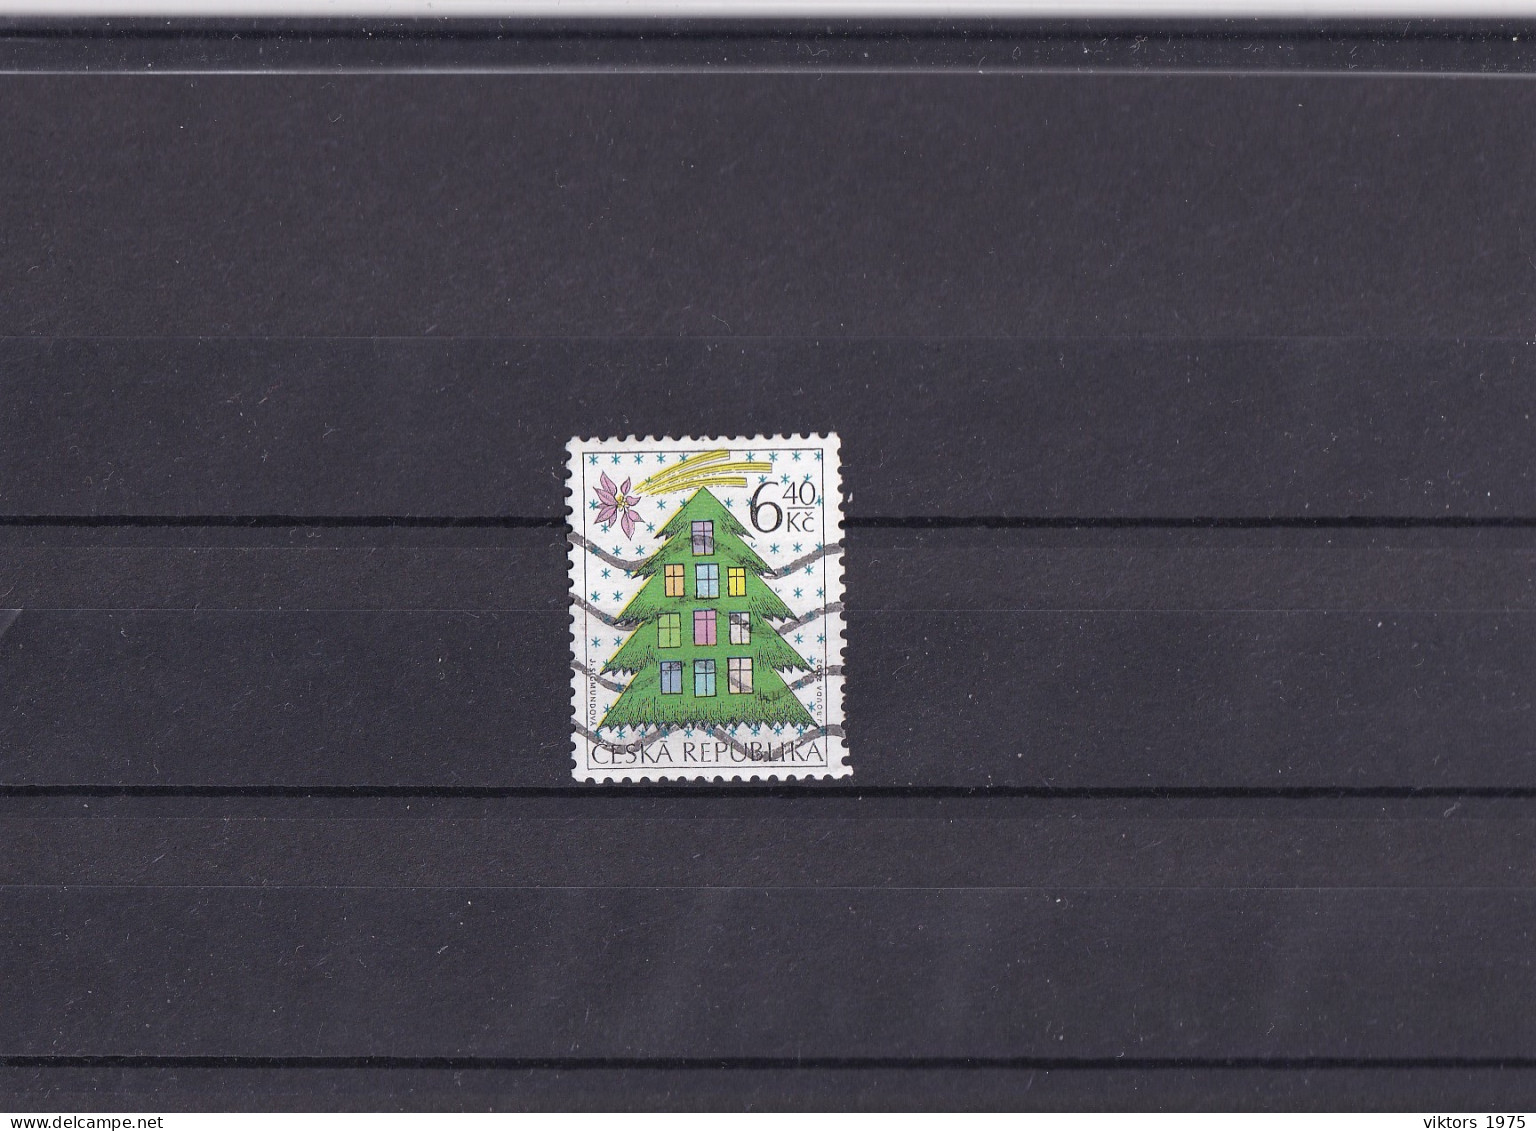 Used Stamp Nr.336 In MICHEL Catalog - Usados